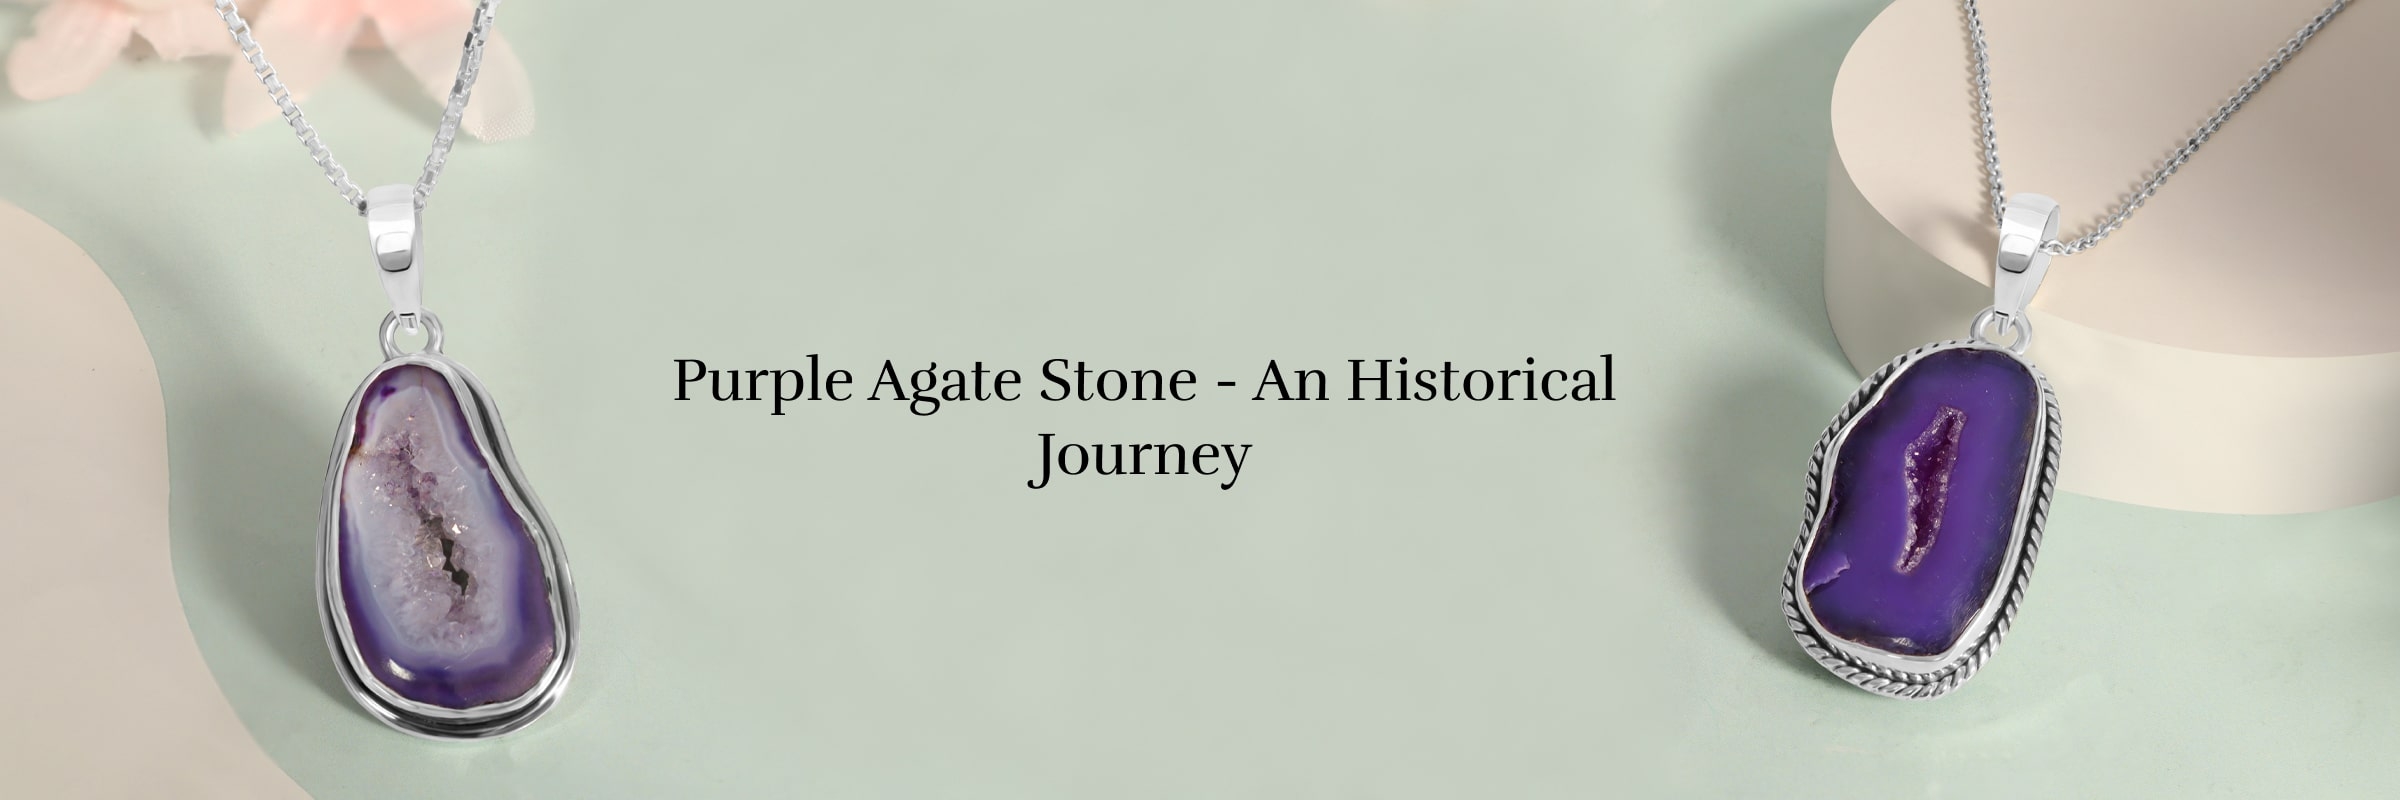 History of Purple Agate Stone